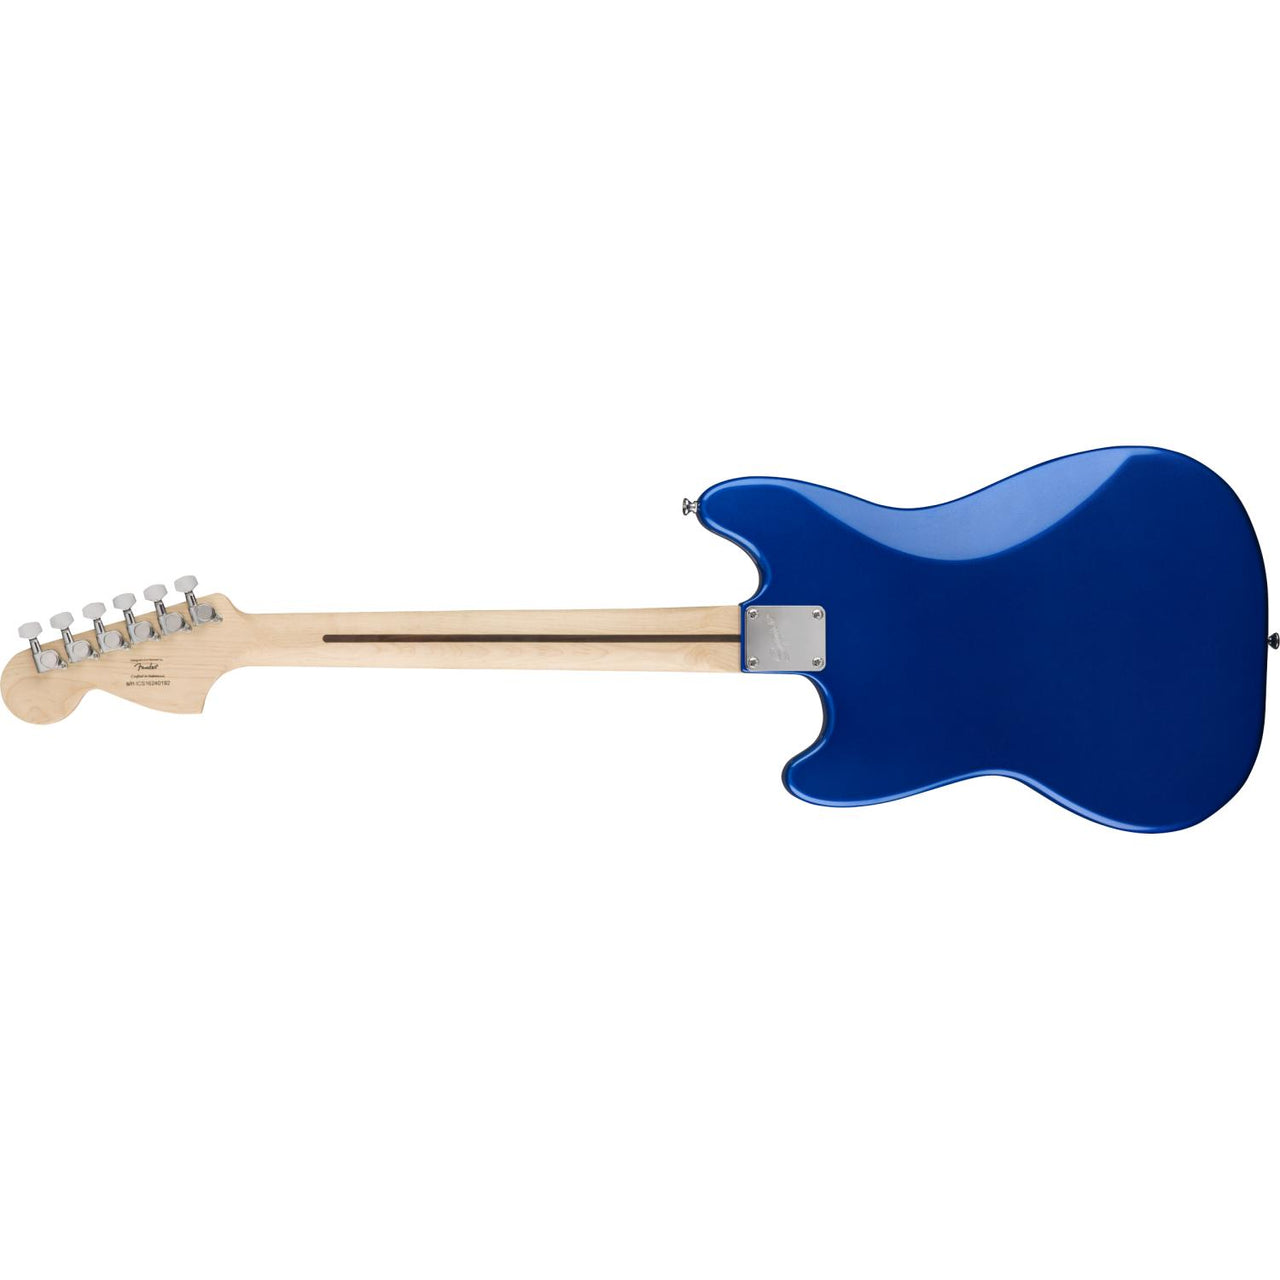 Guitarra Electrica Fender Sq Bullet Mustang Hh Impb, 0371220587